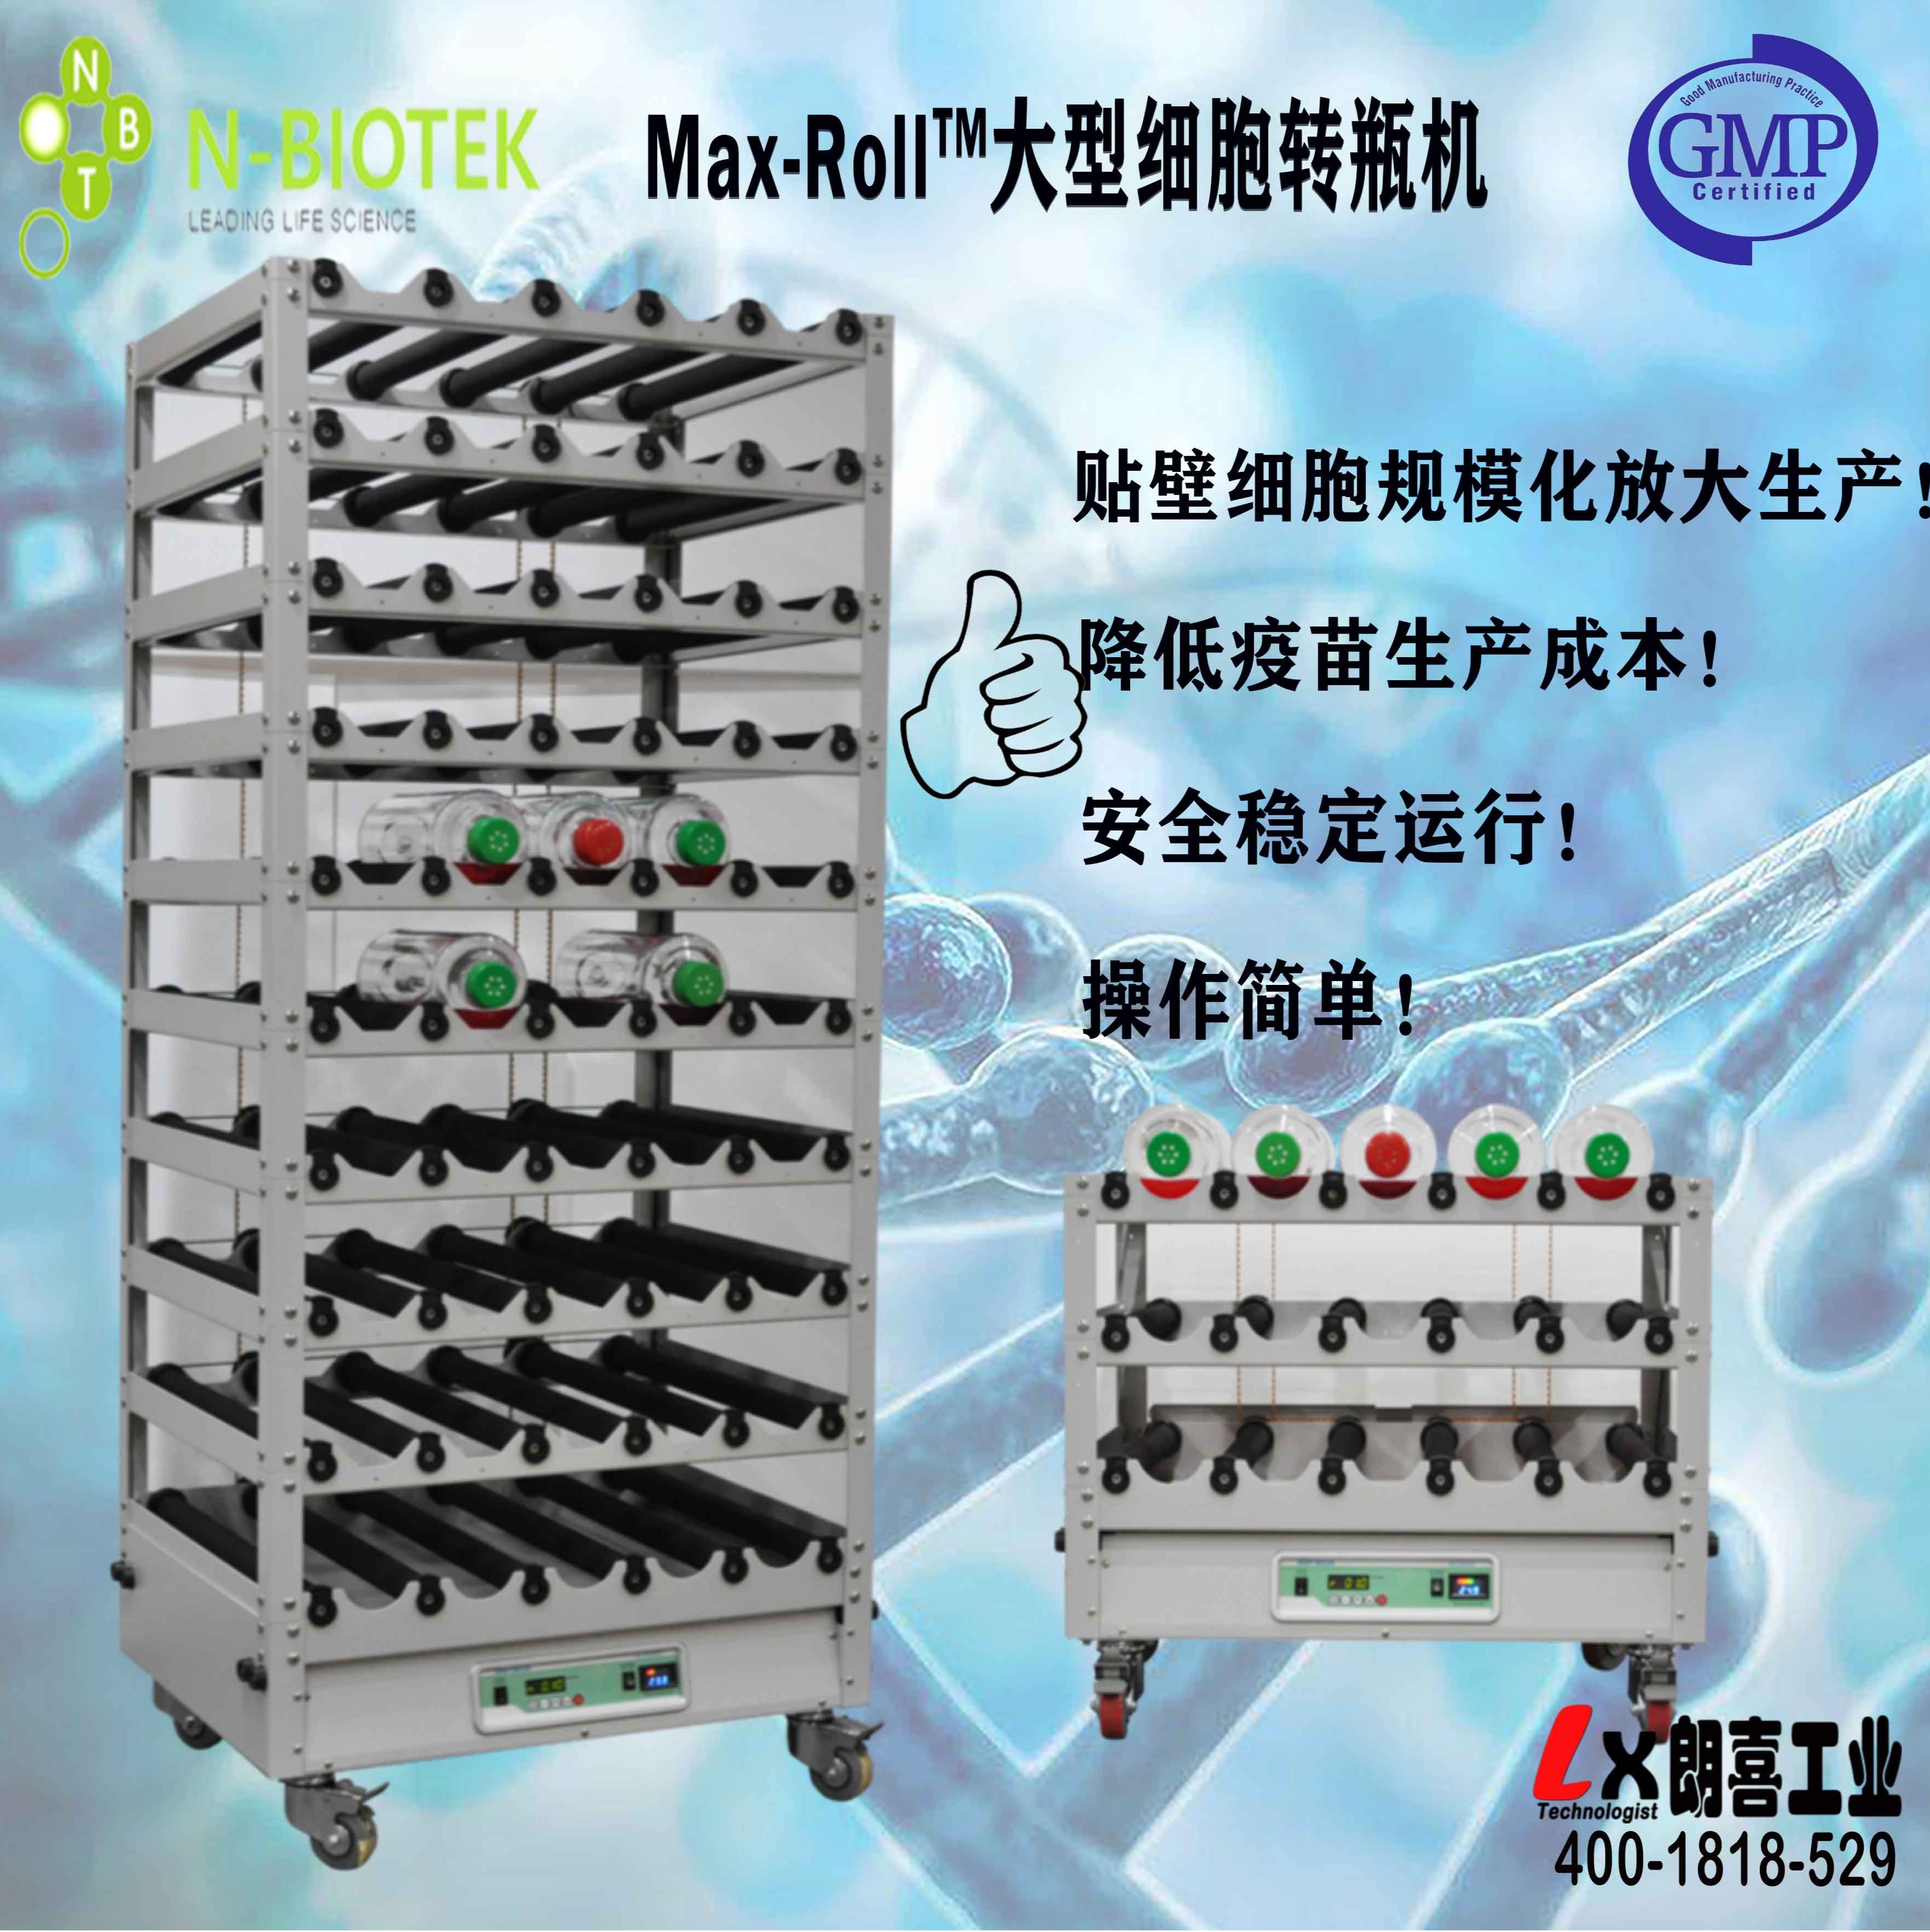 Max-Roll 生產型細胞滾瓶機